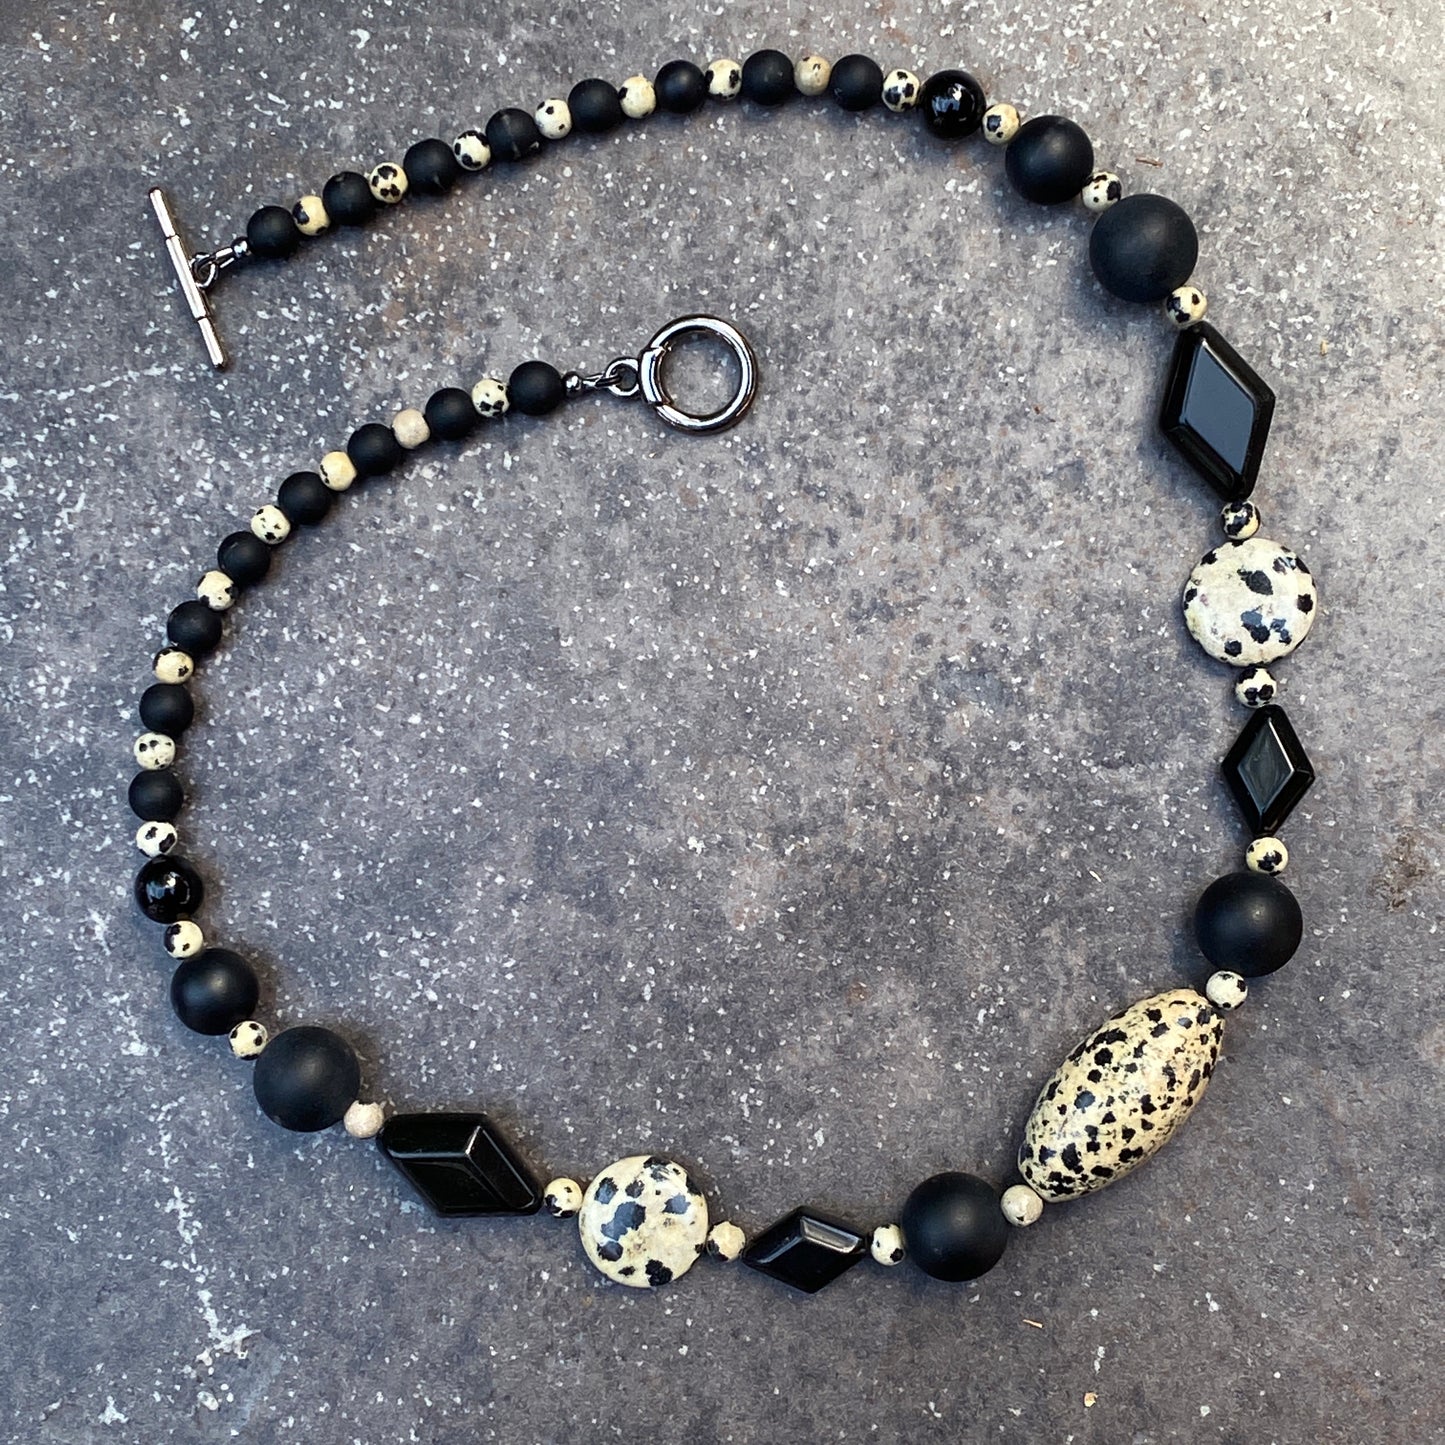 Dalmatian Jasper gemstone, Onyx, and Oxidized Sterling Silver Men’s Necklace